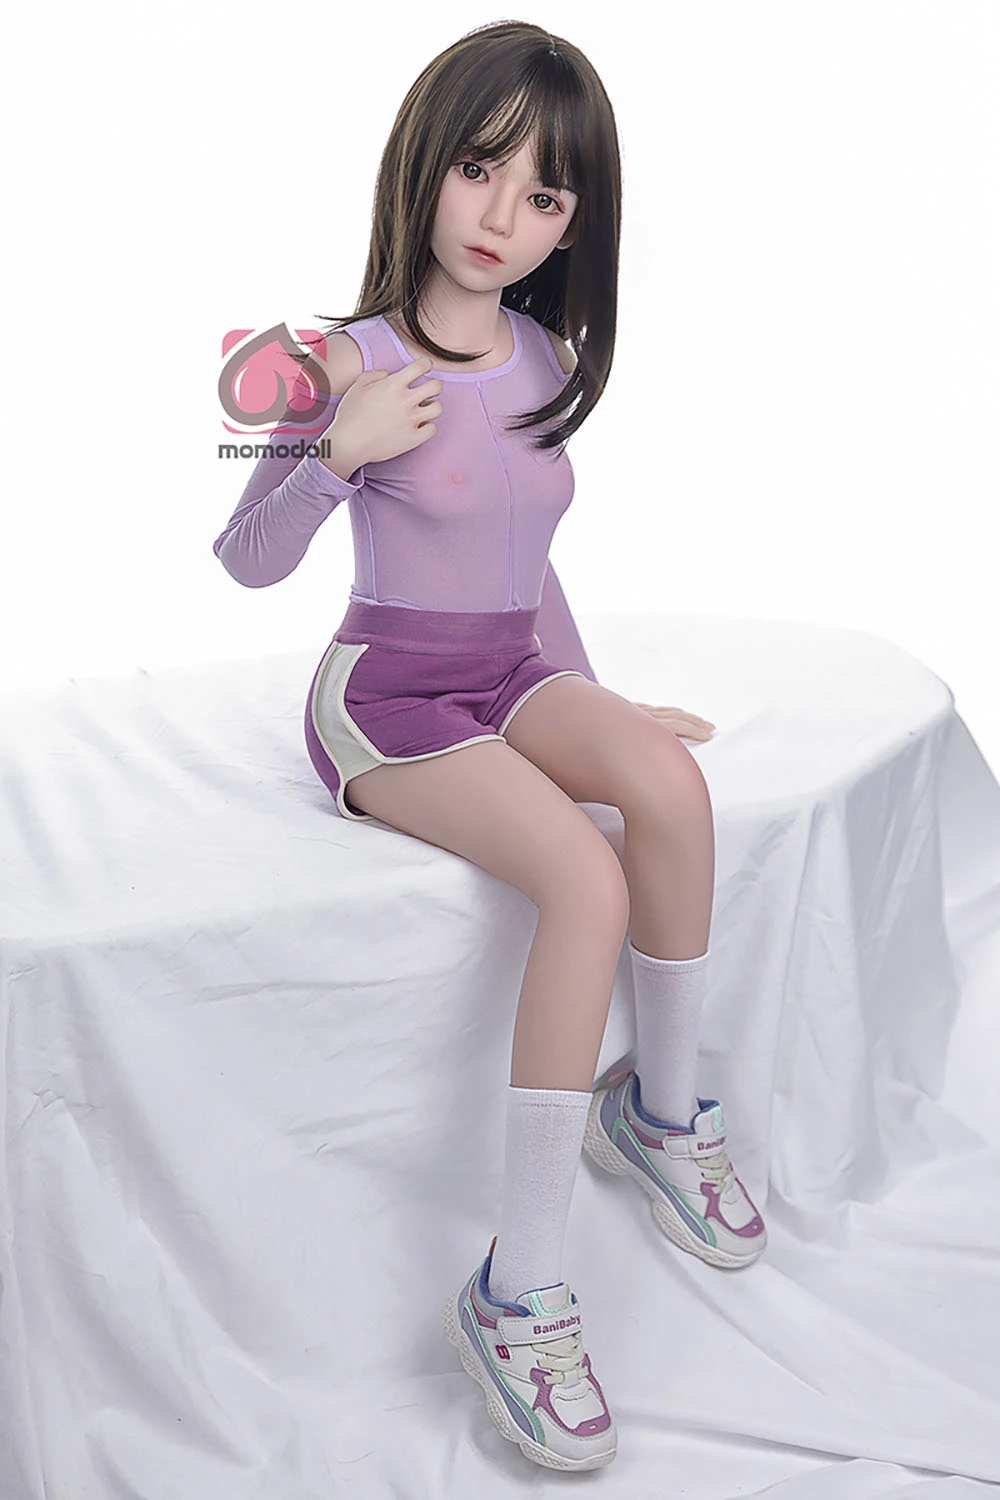 momo doll ヌードロリ 小学生 アニメ セックス 微乳 シリコン セックス 人形 エロ